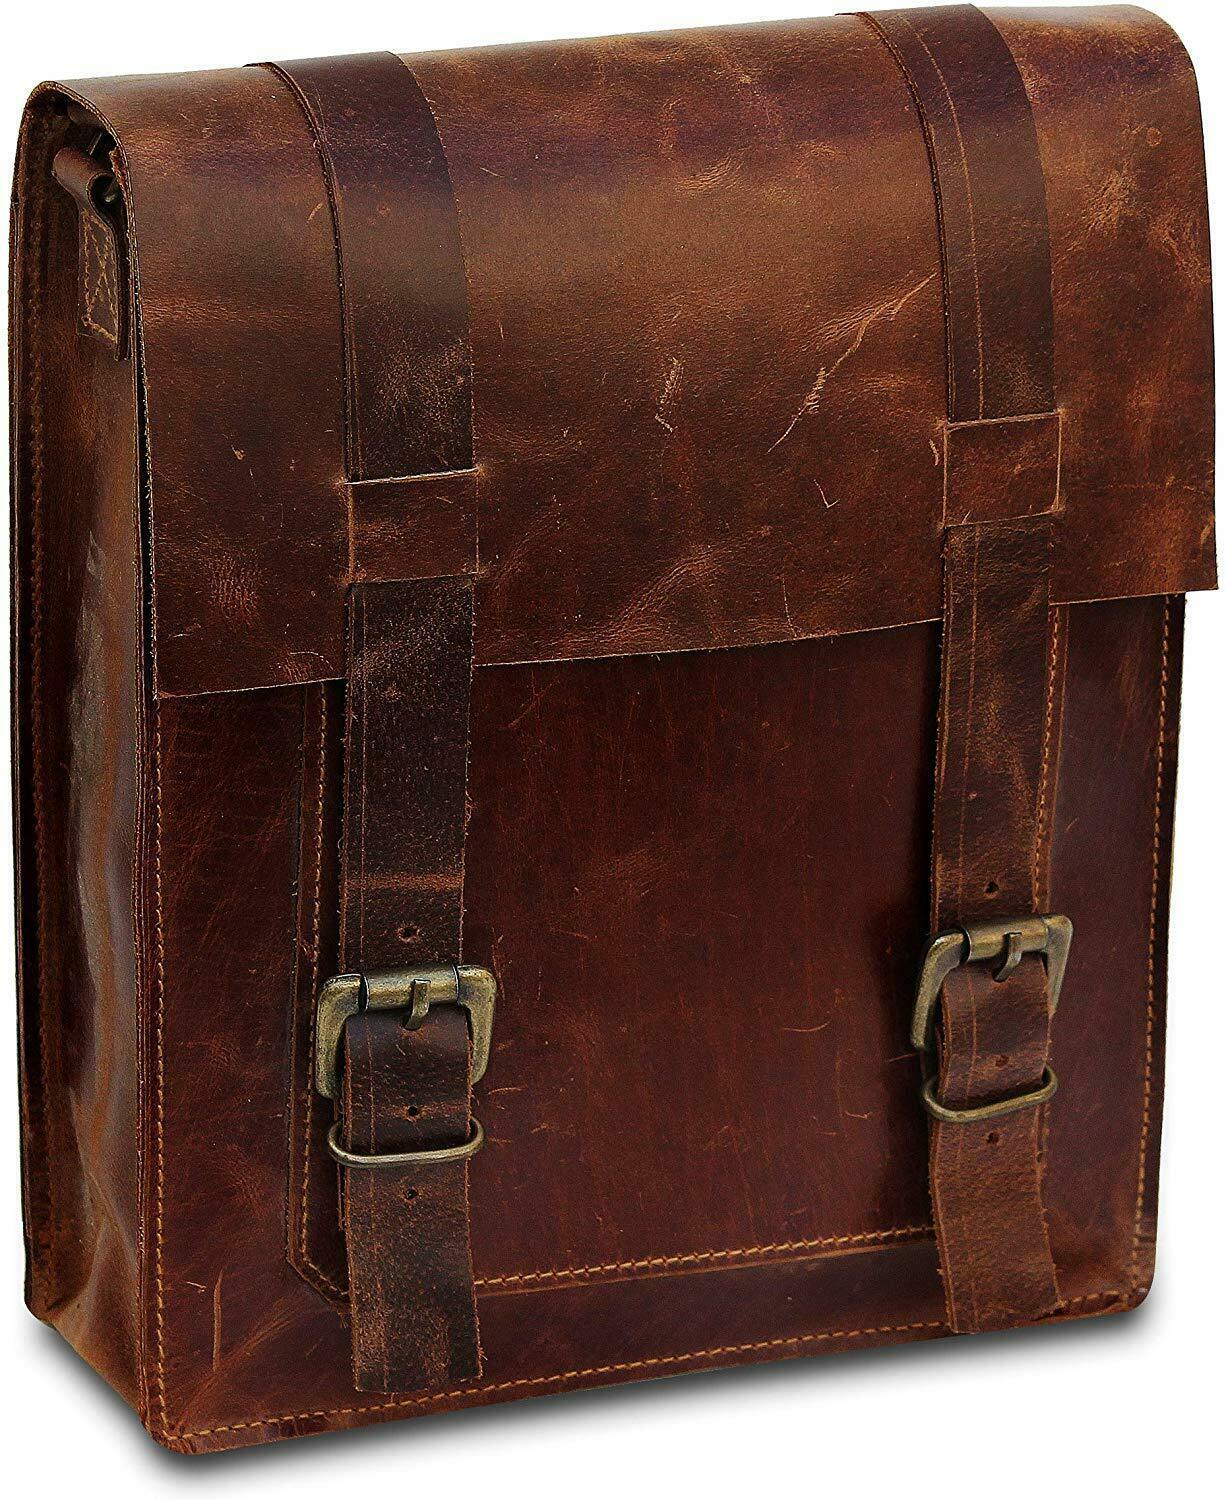 iPad Shoulder Bag / iPad Case with Shoulder Strap / Premium Bag - Laptop Cases & Bags